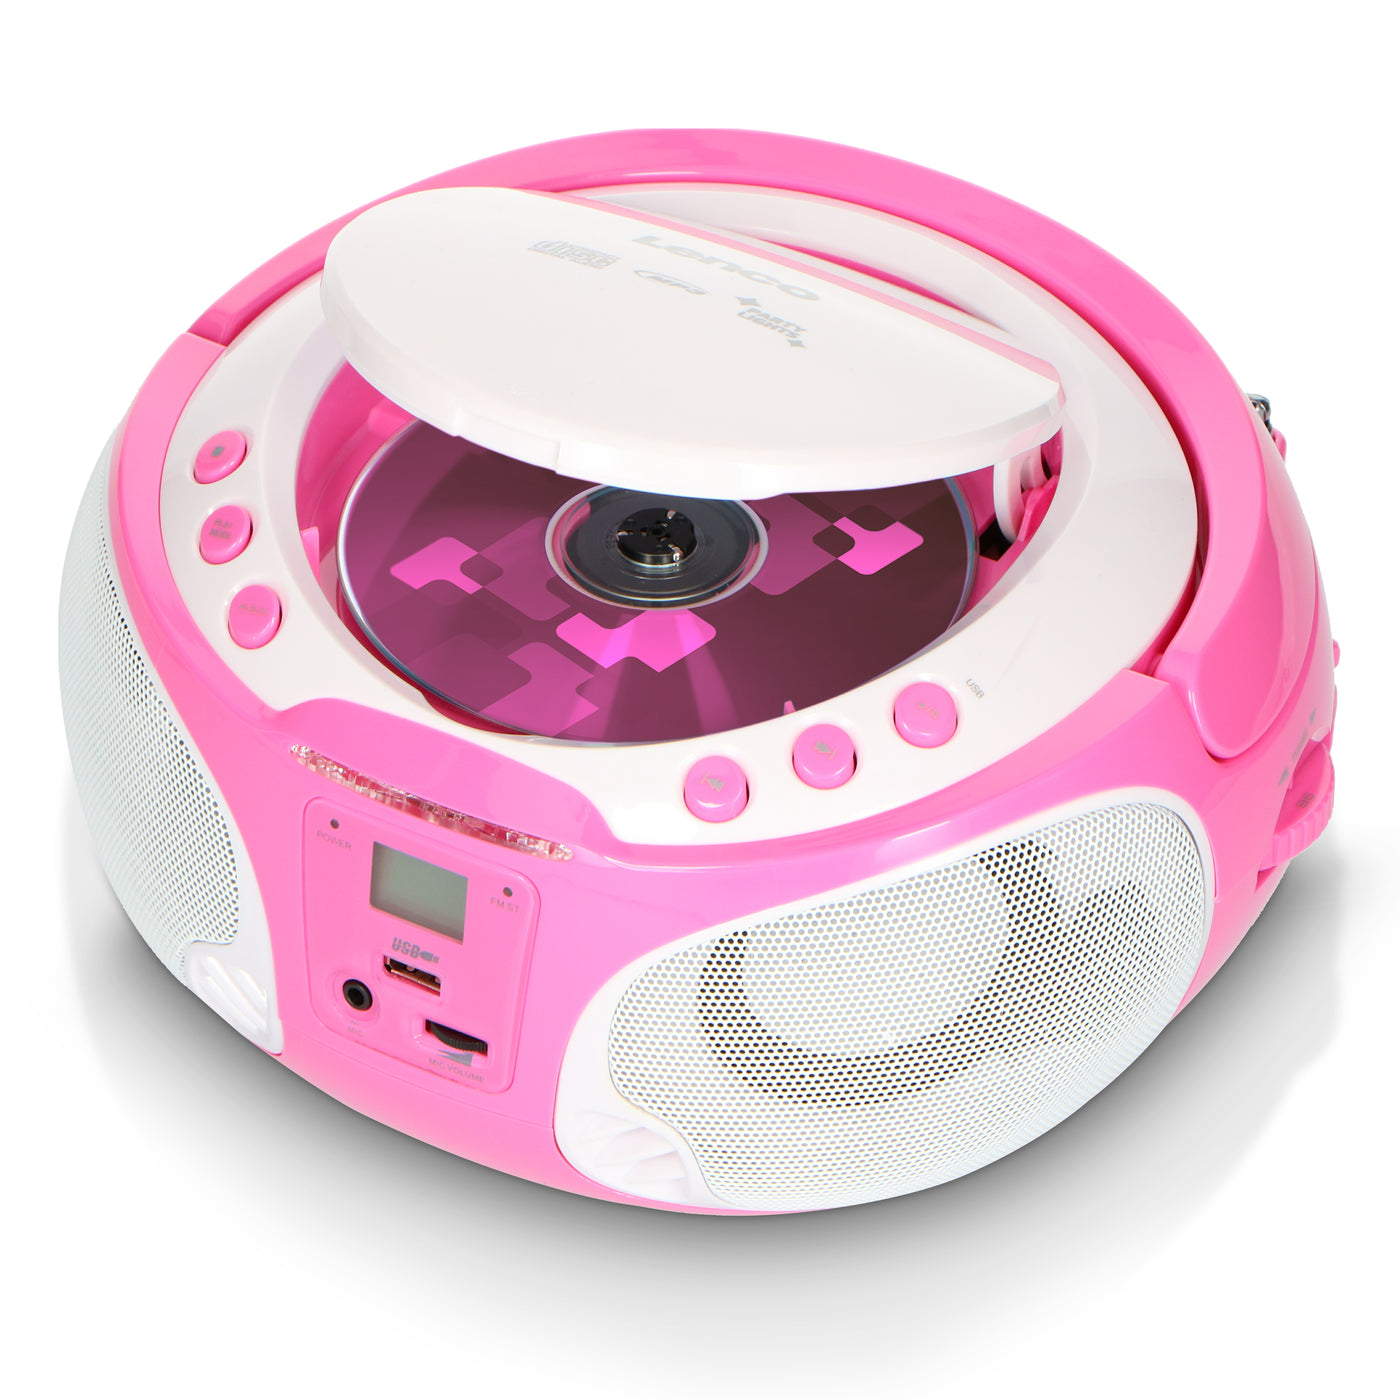 Lenco SCD-650PK - Tragbares FM-Radio mit CD/MP3-Player - USB-Anschluß - Karaoke - Mikrofon - Lichteffekte - Pink